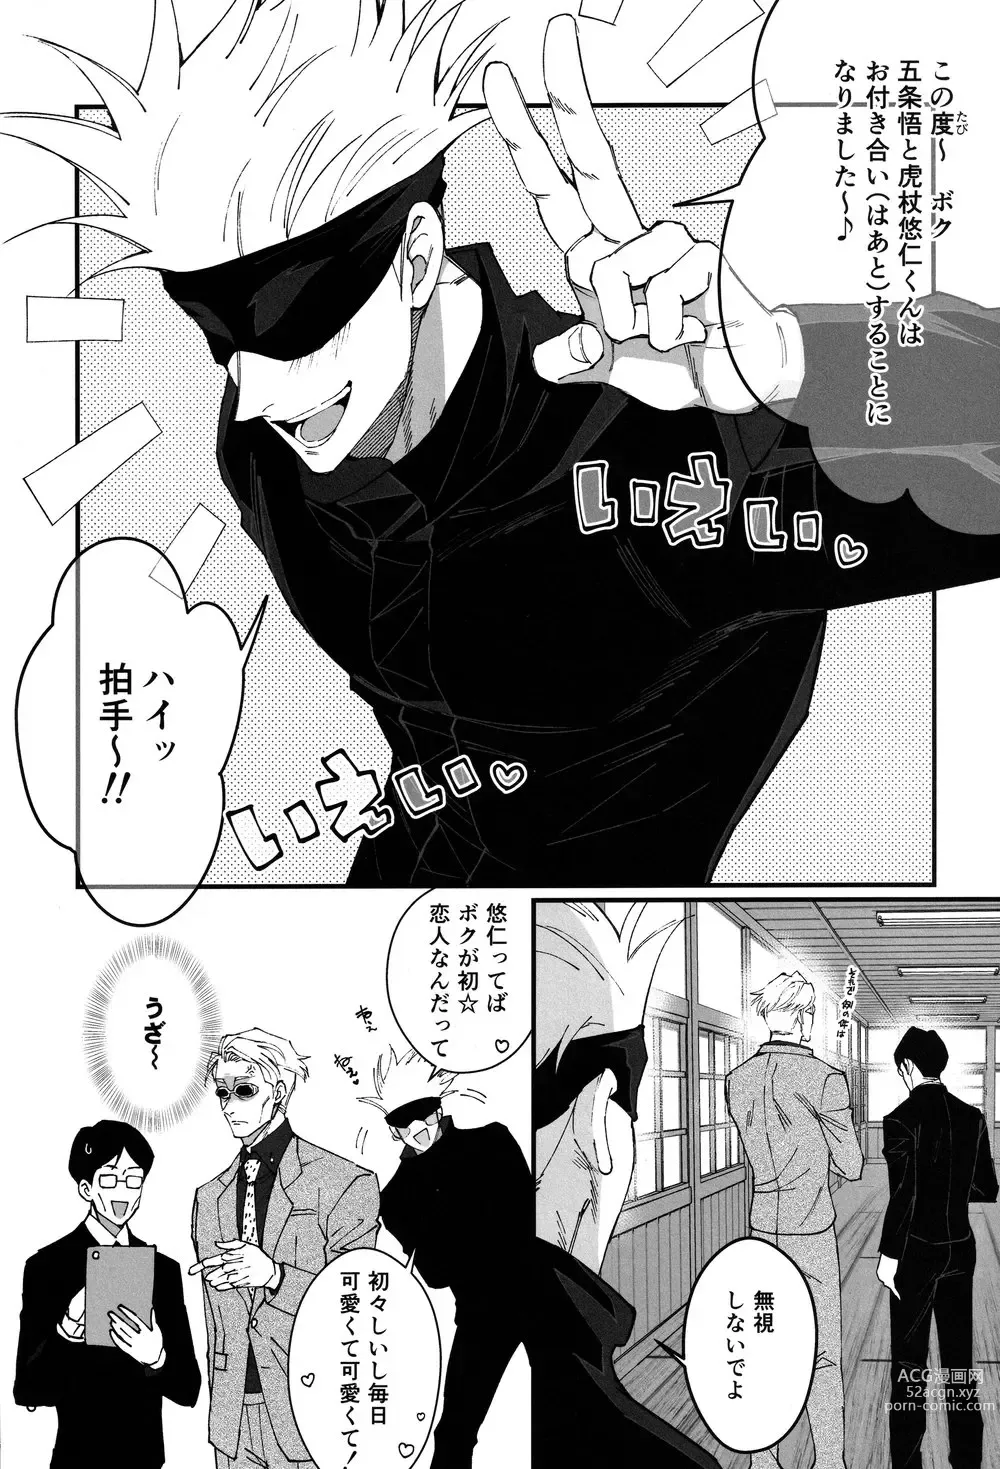 Page 5 of doujinshi Zoku Gachikoi Monster